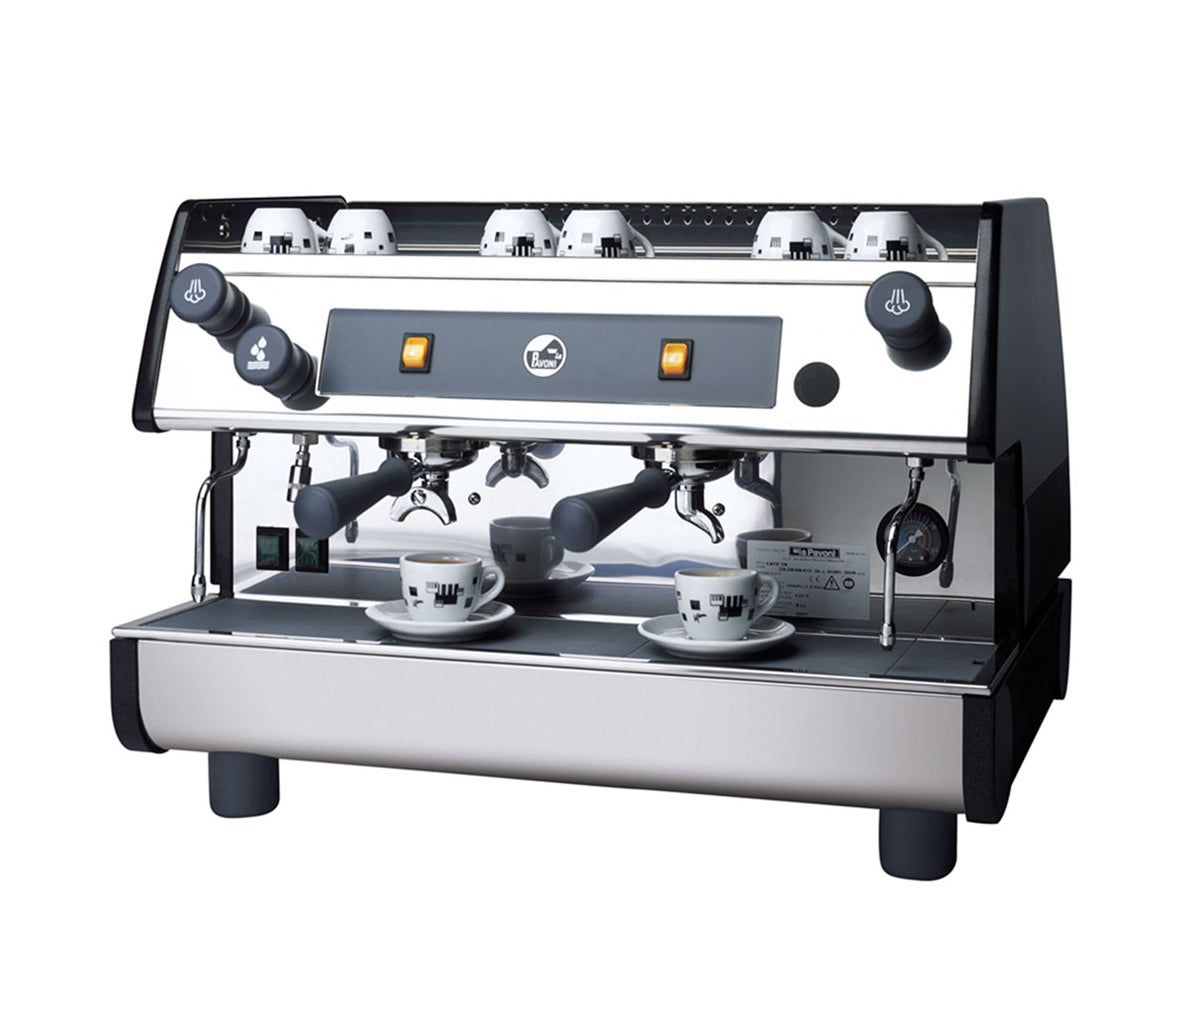 Cafetera espresso - BAR 3L - La Pavoni - profesional / manual / de